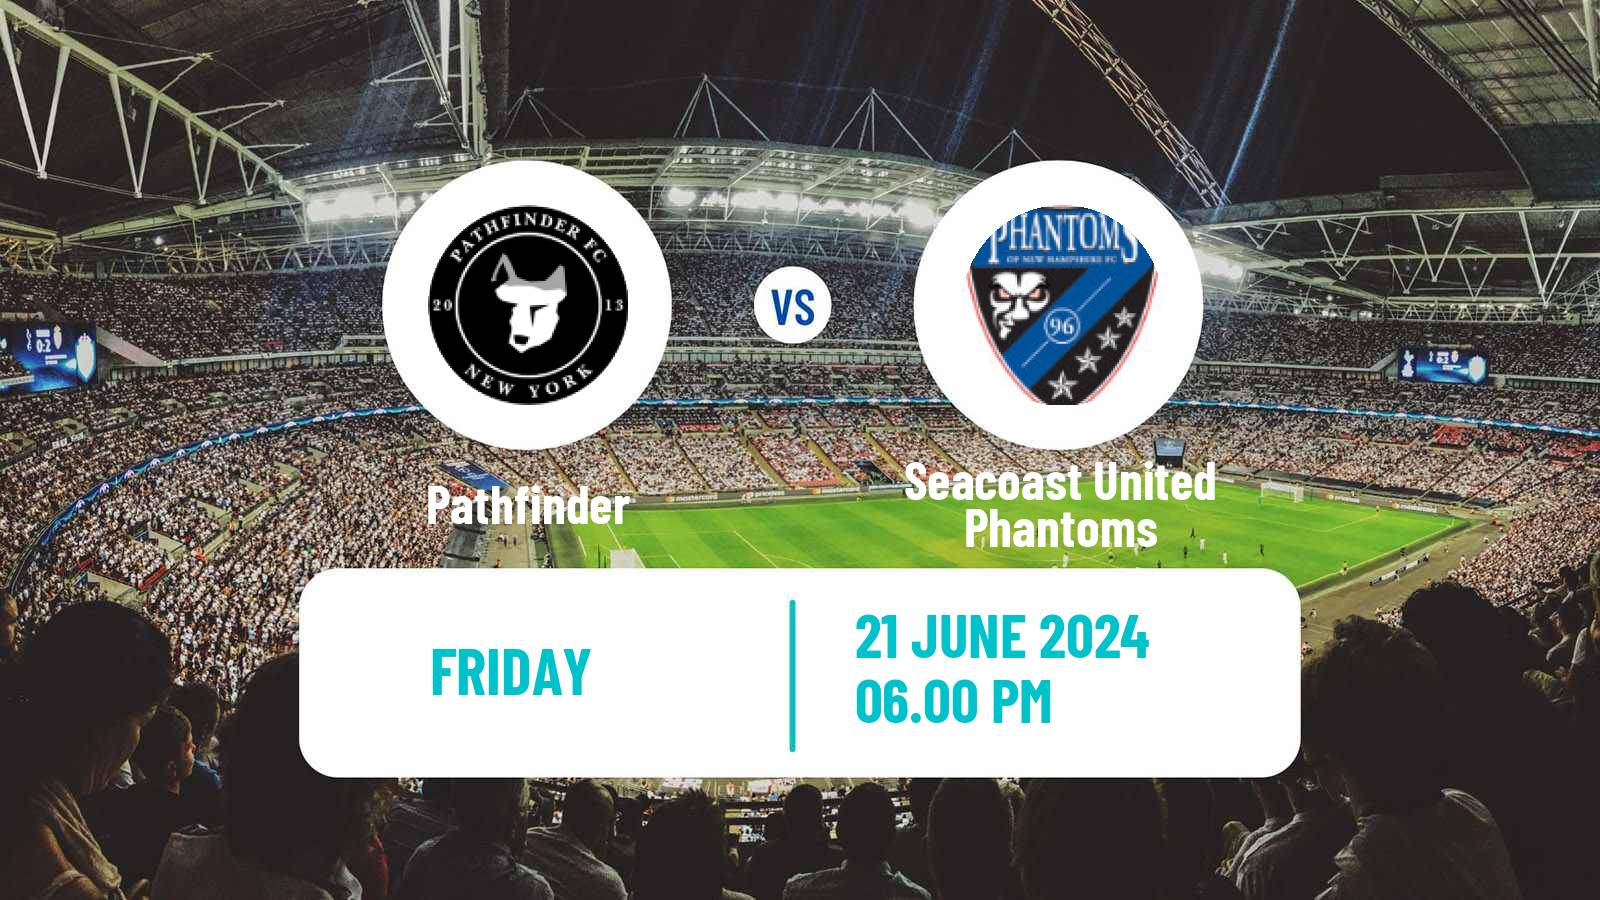 Soccer USL League Two Pathfinder - Seacoast United Phantoms